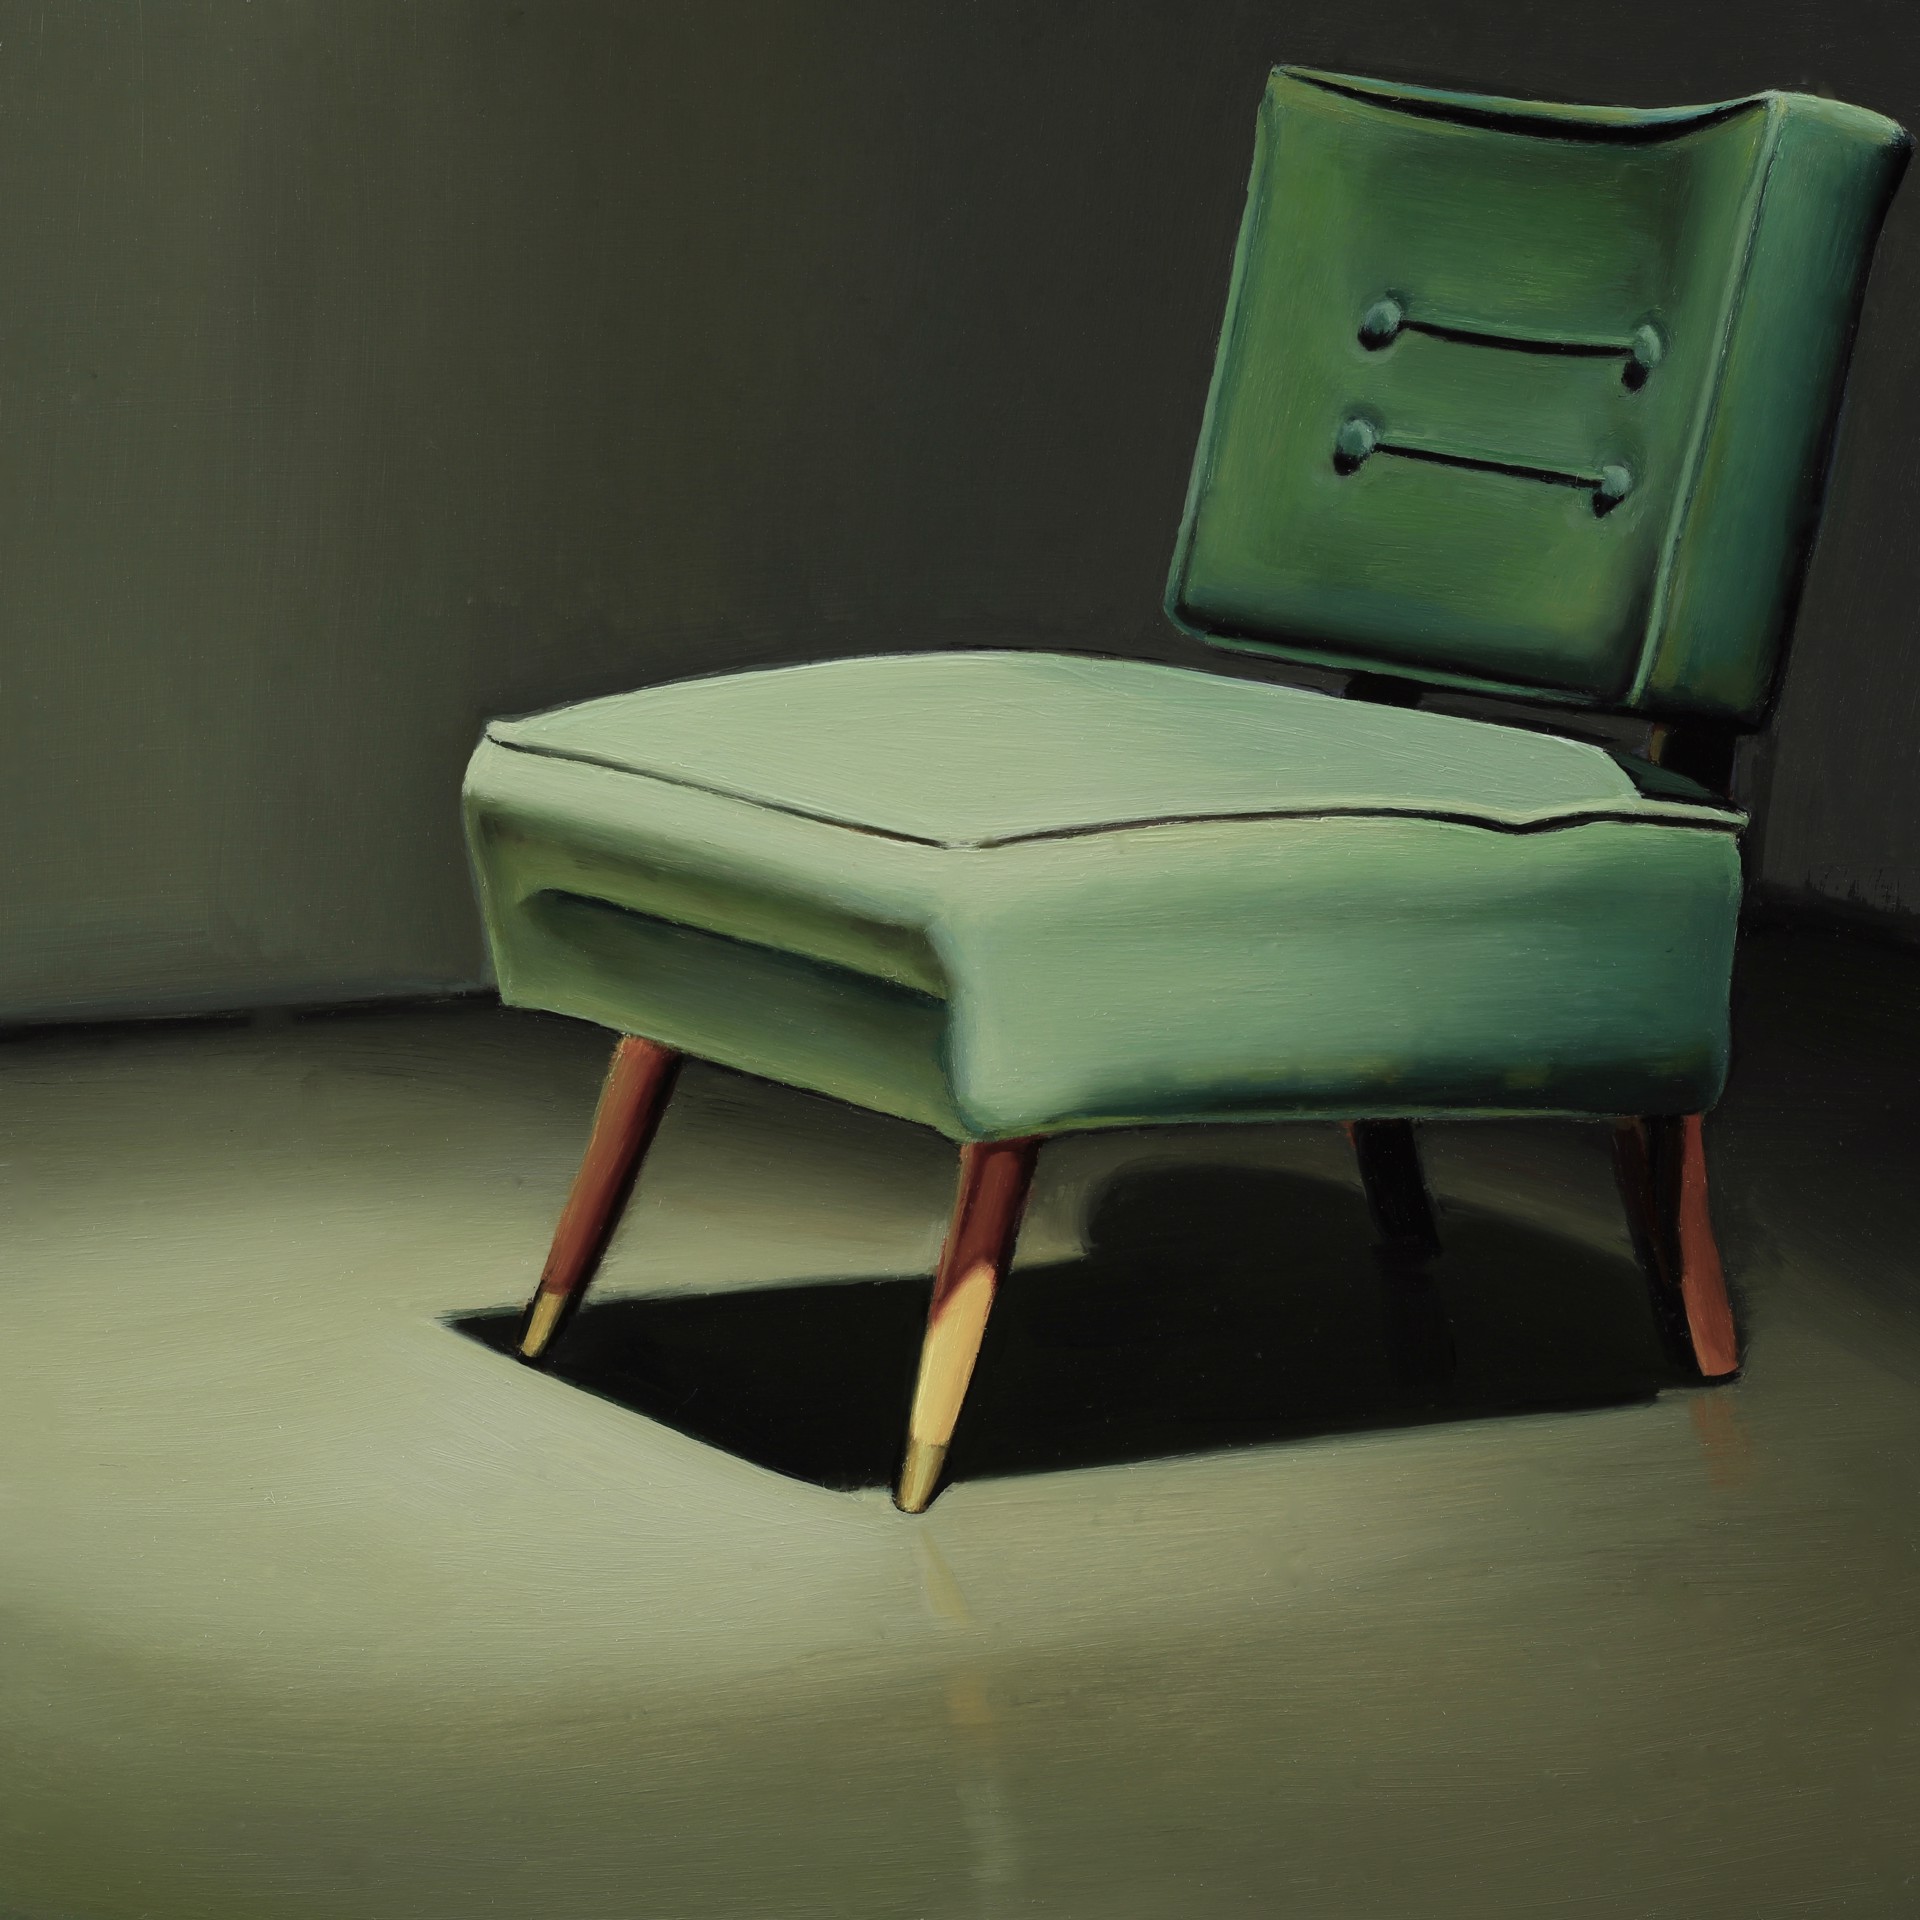 Serta Building Chair #11 by Ada Sadler